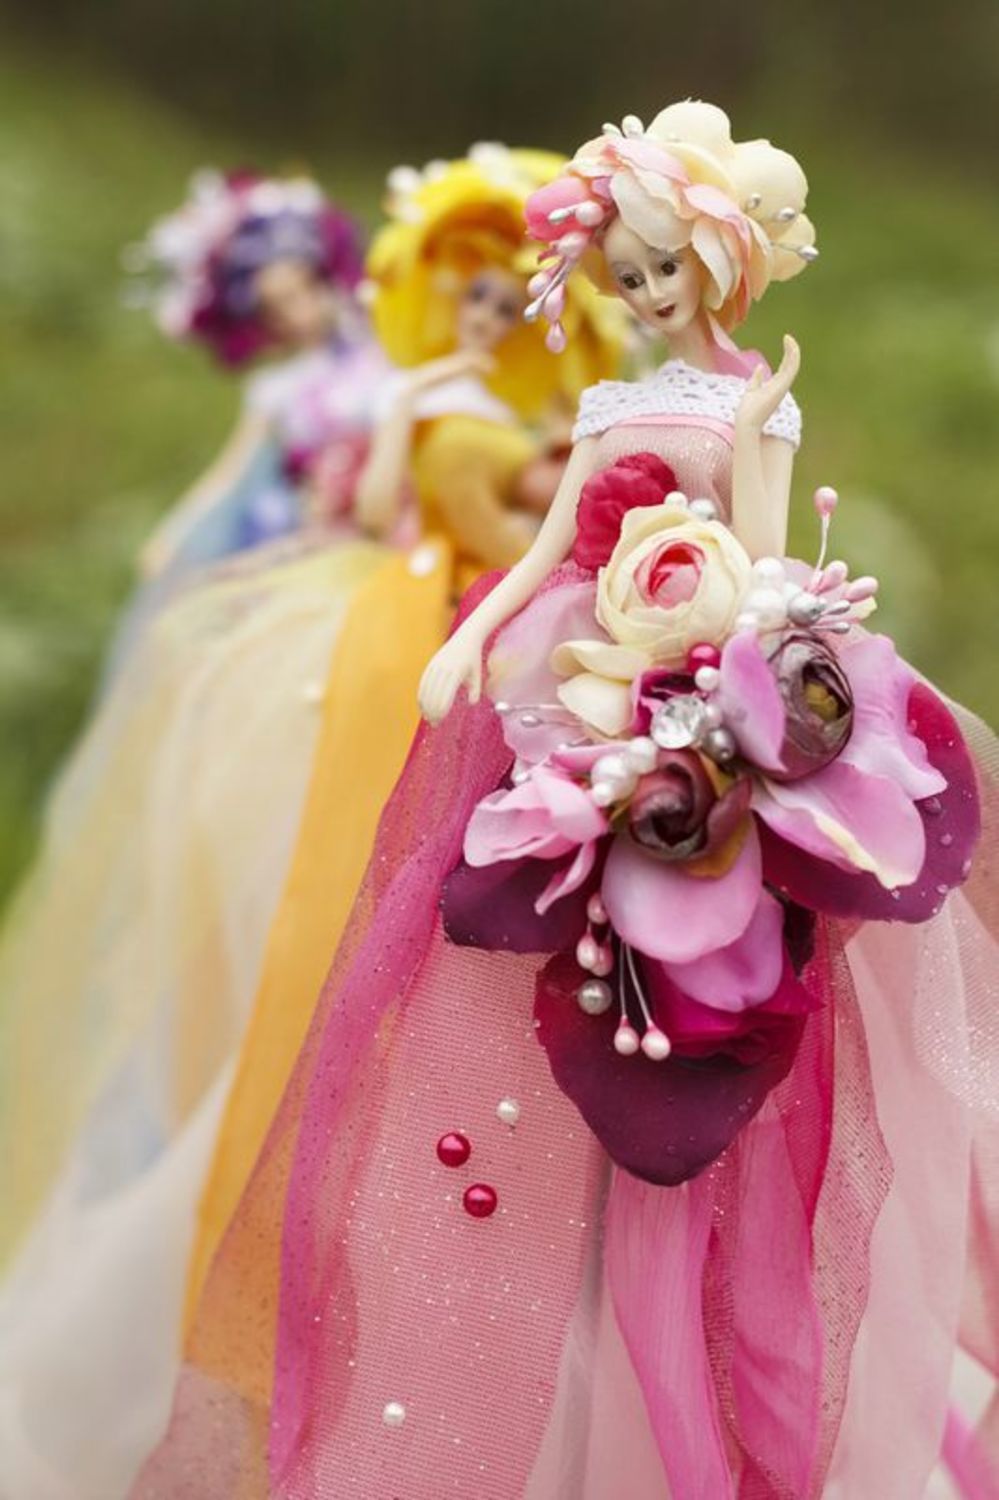 Wedding doll in pink dress photo 1